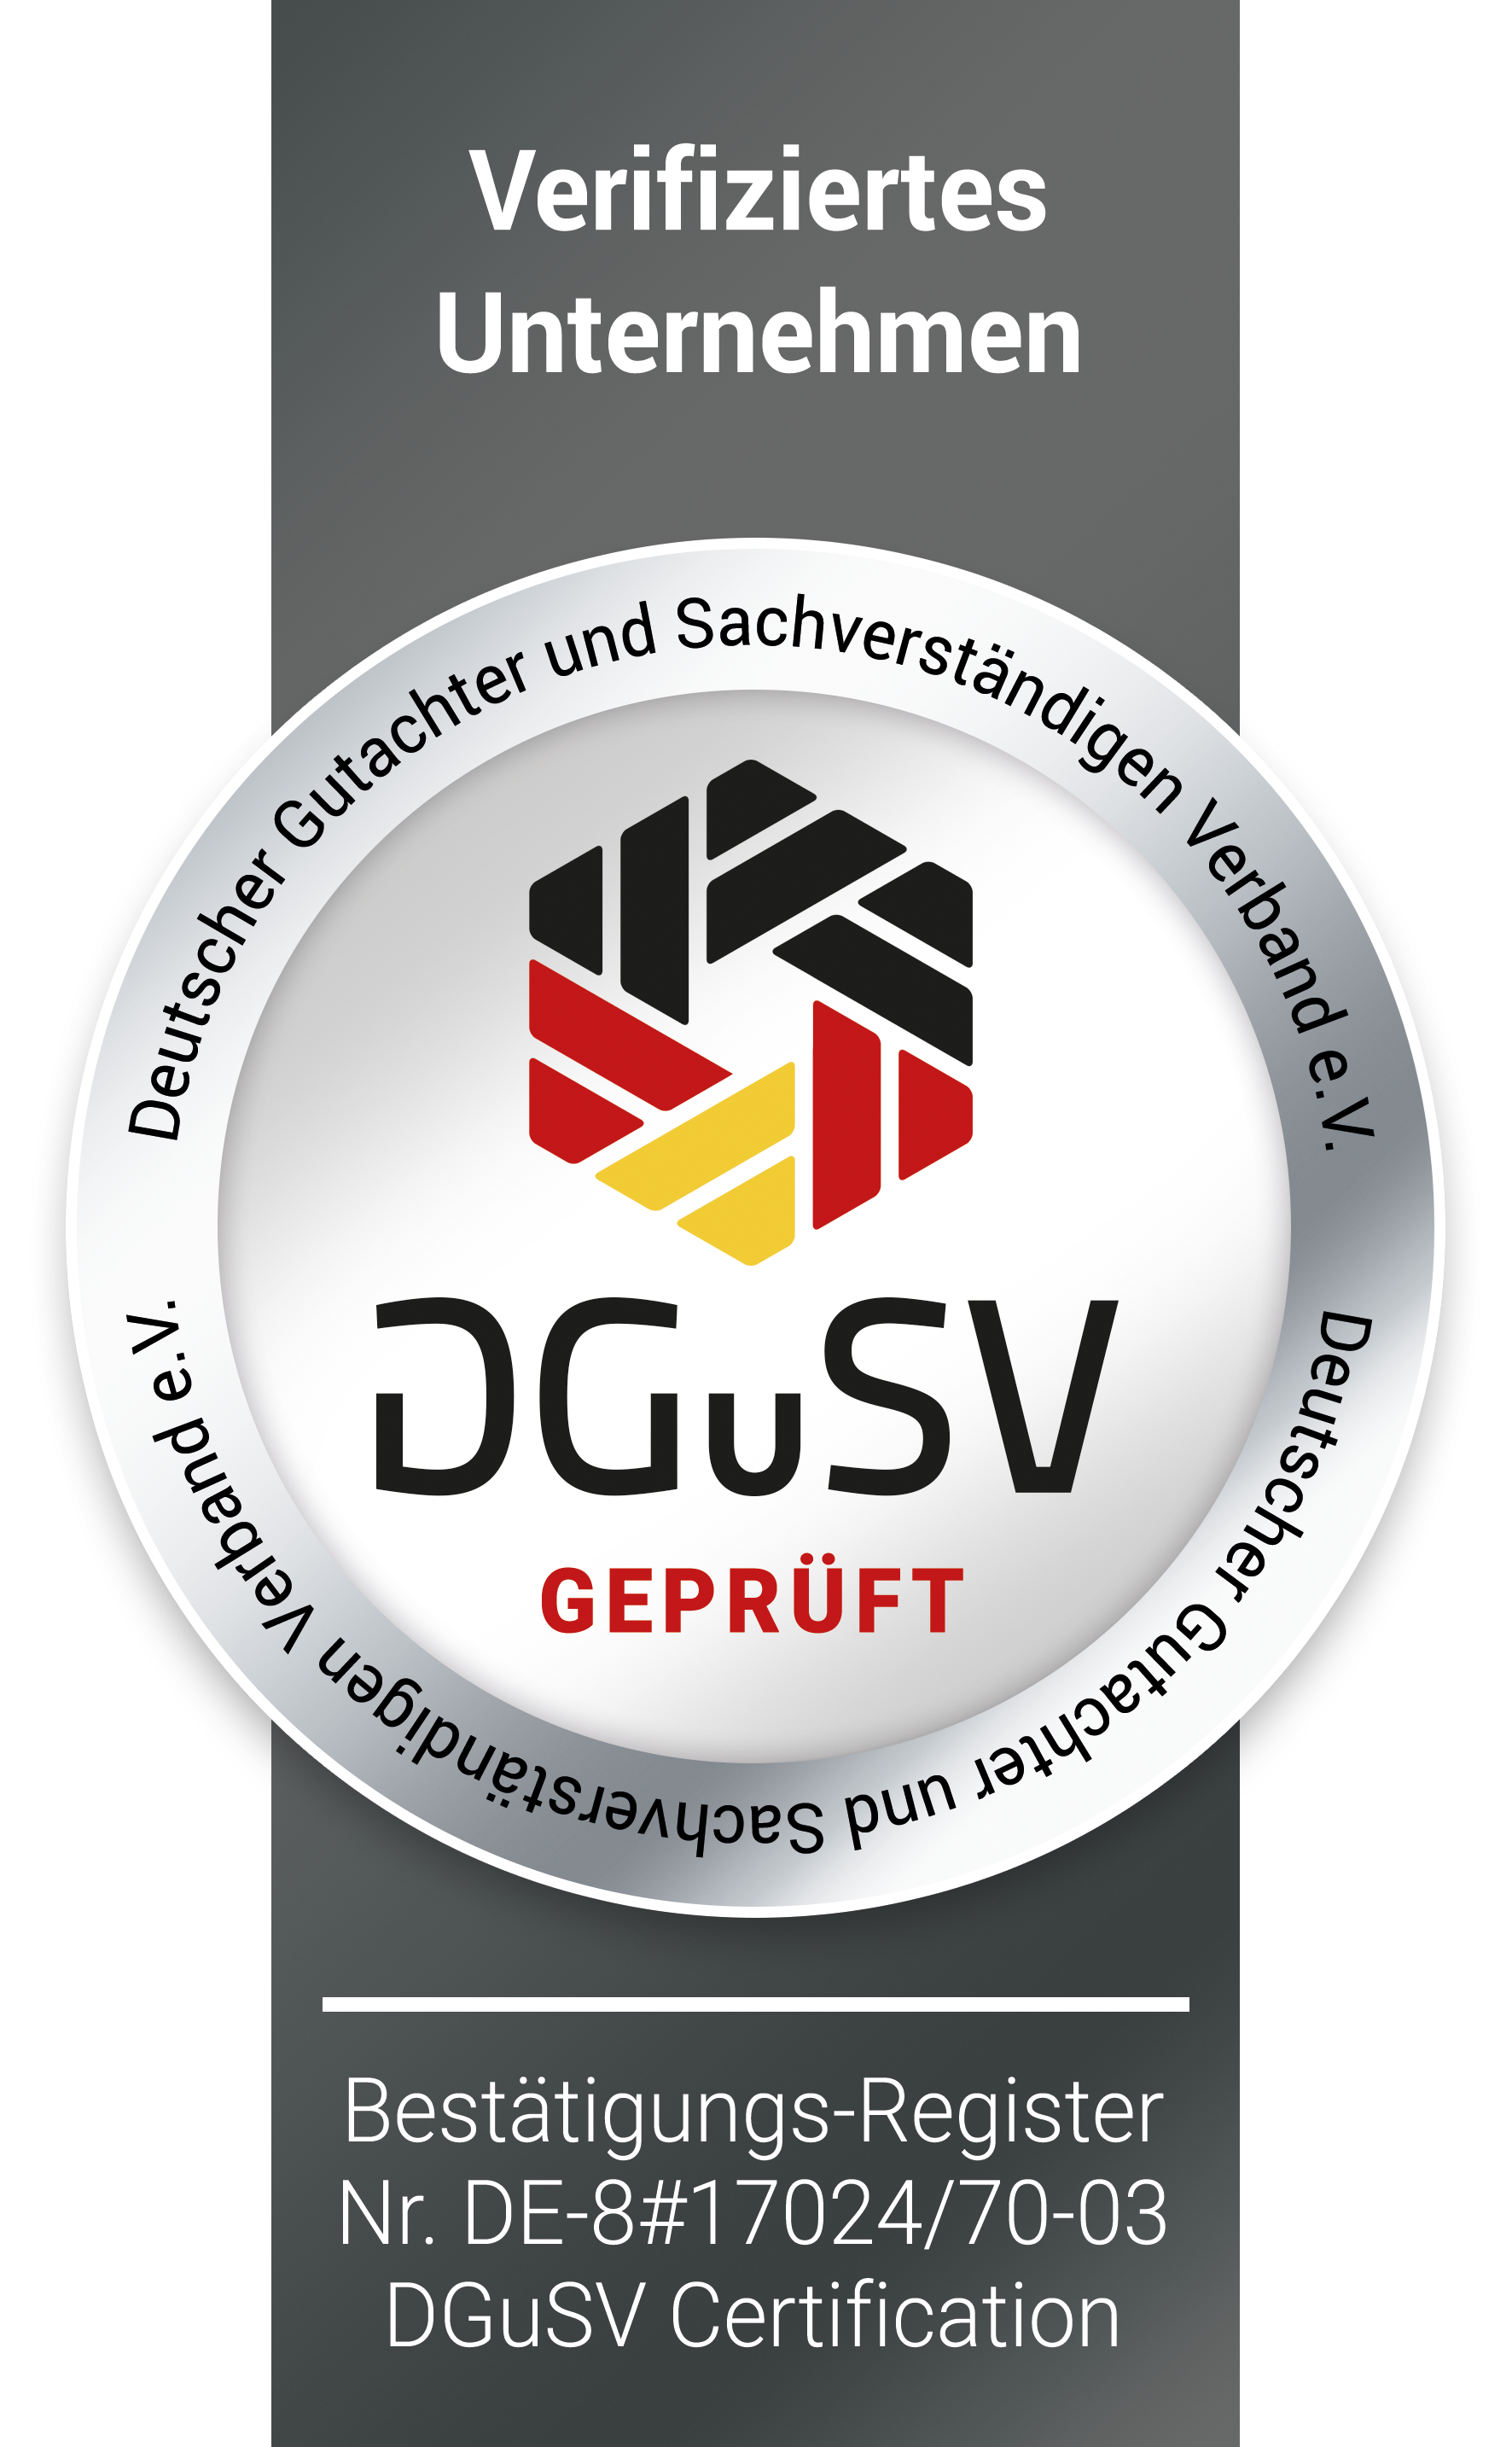 German appraiser and expert association eV - verified company